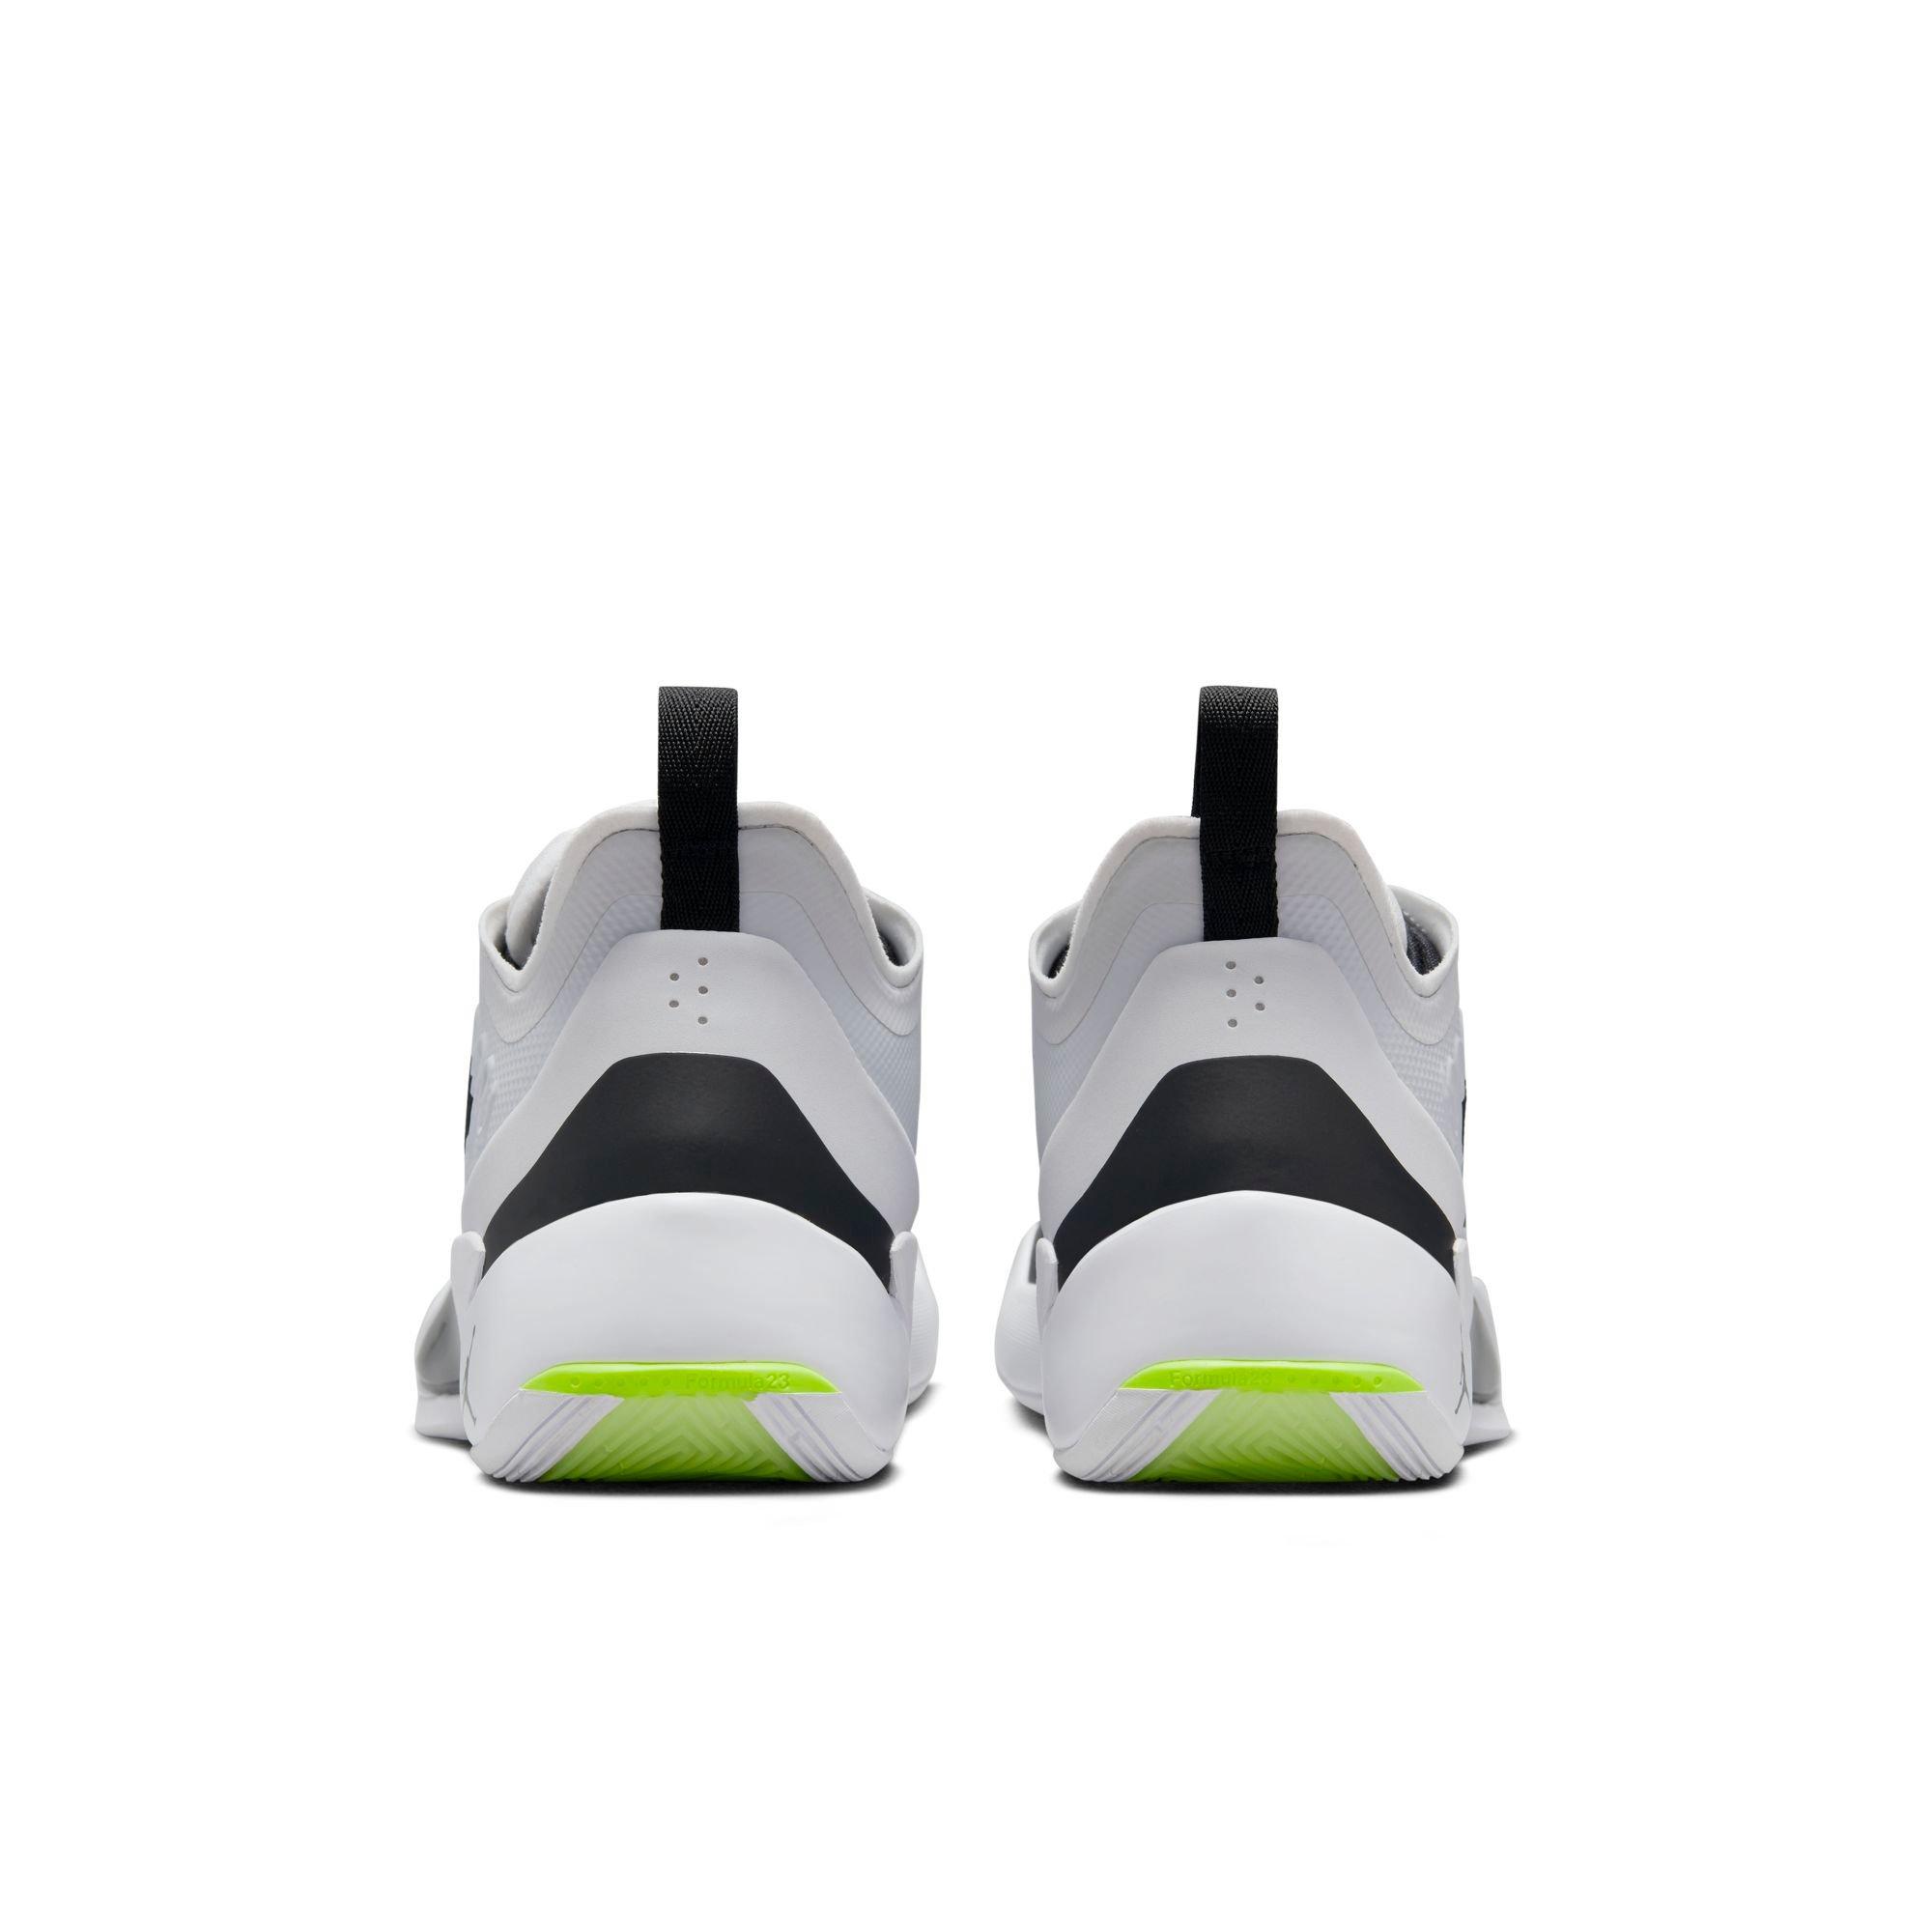 Jordan Luka 1 White/Black/Volt Men's Basketball Shoes, Size: 10